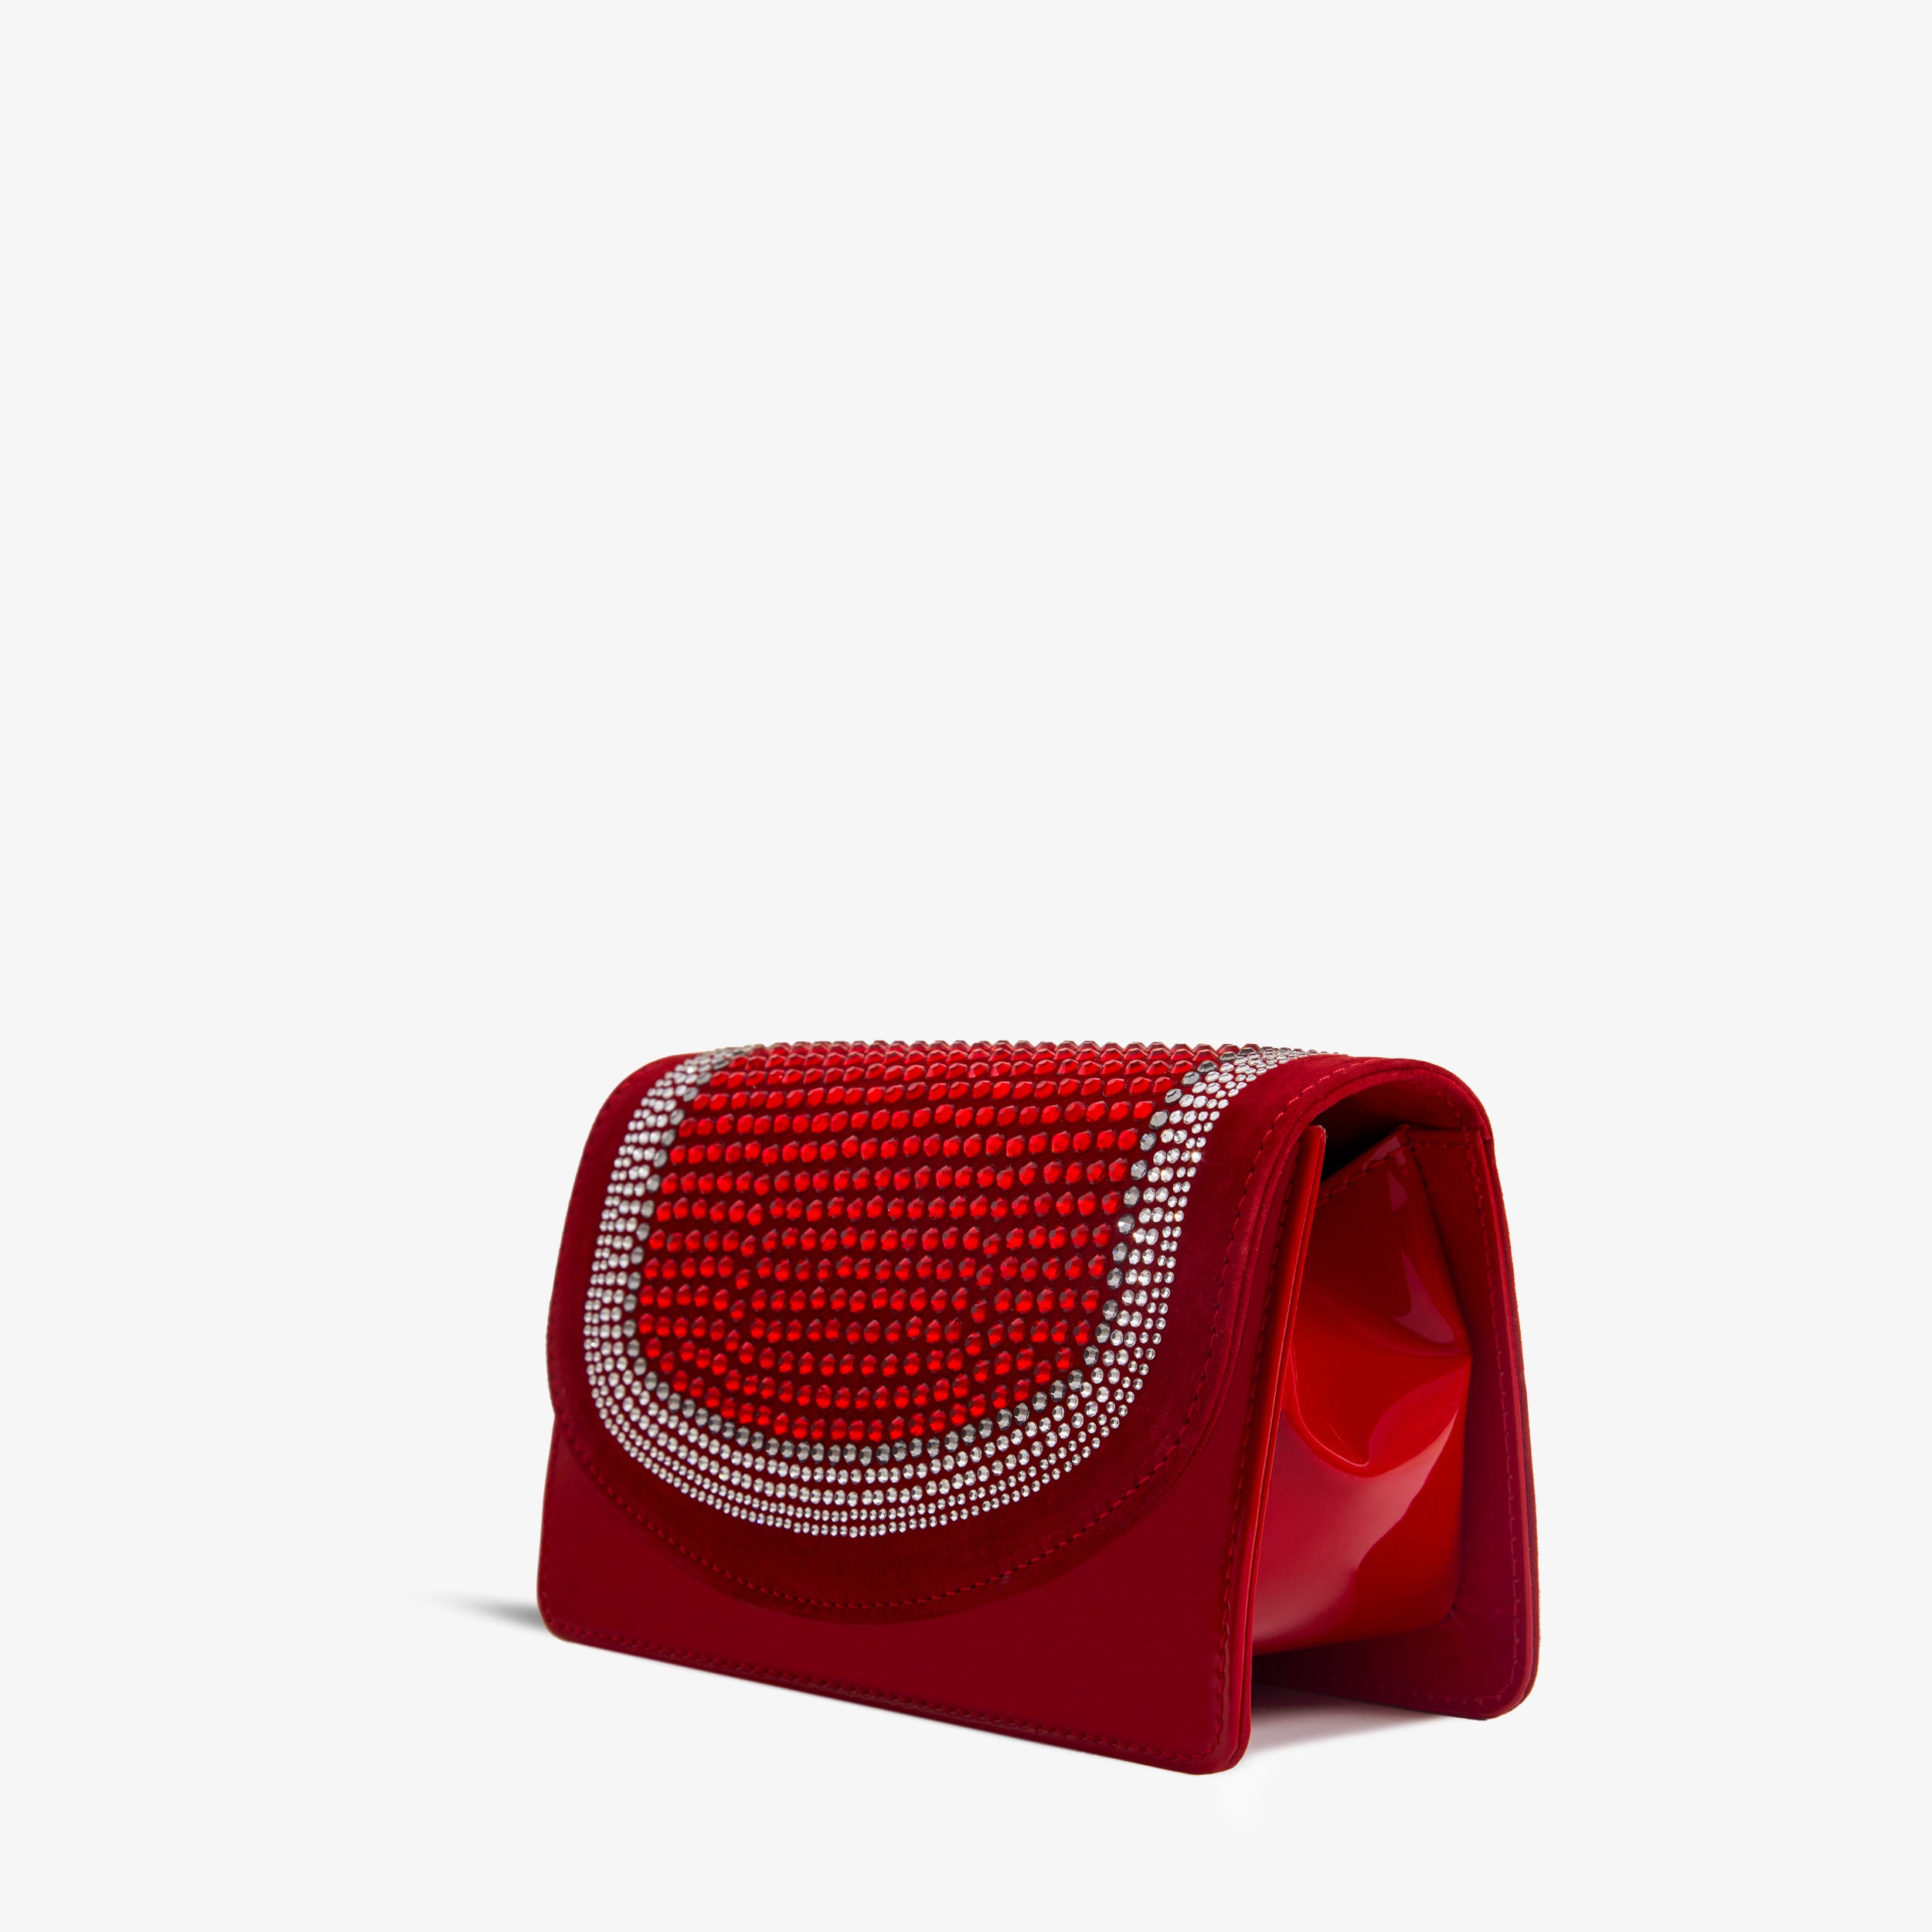 The Barneveld Red Glitter Leather Handbag